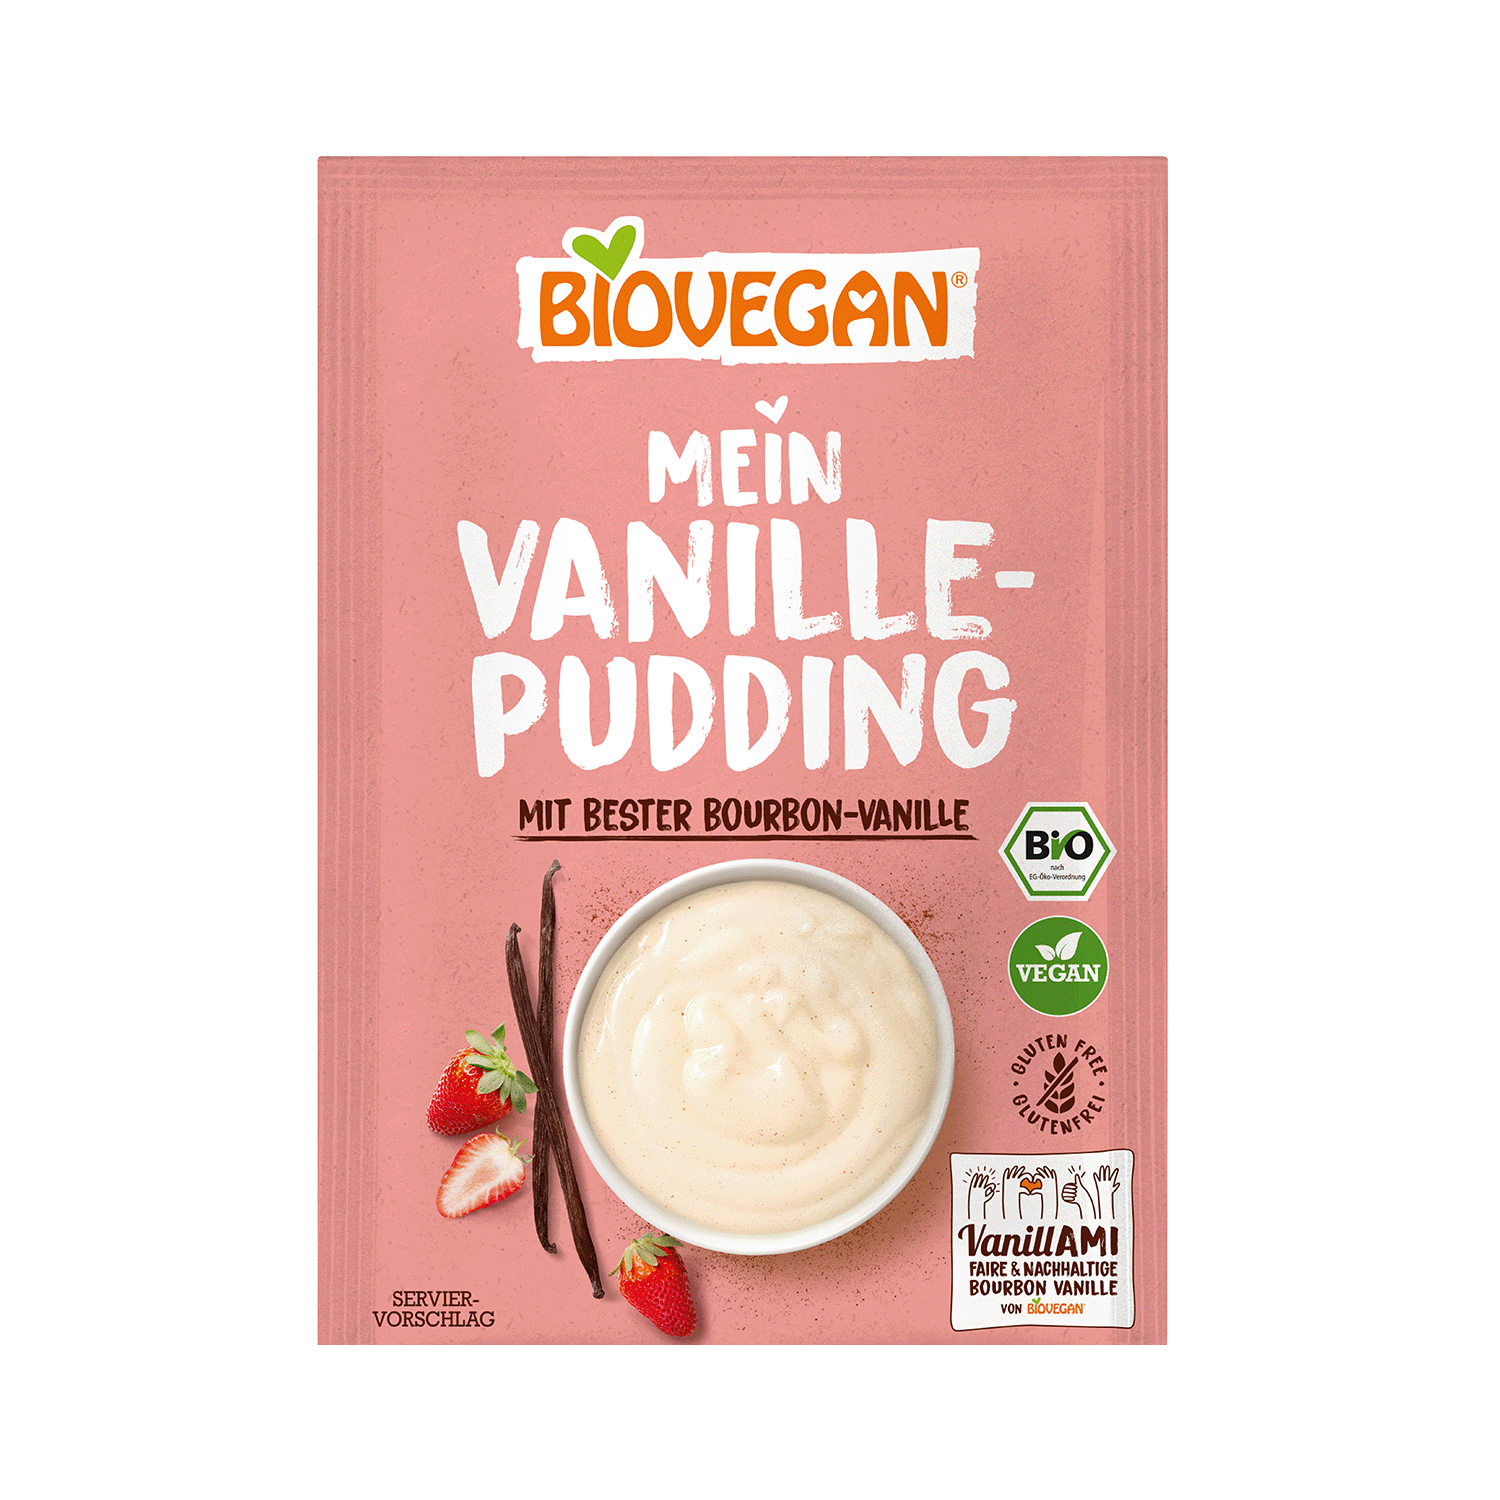 My Vanille Pudding With Bourbon-Vanilla, Organic, 33g